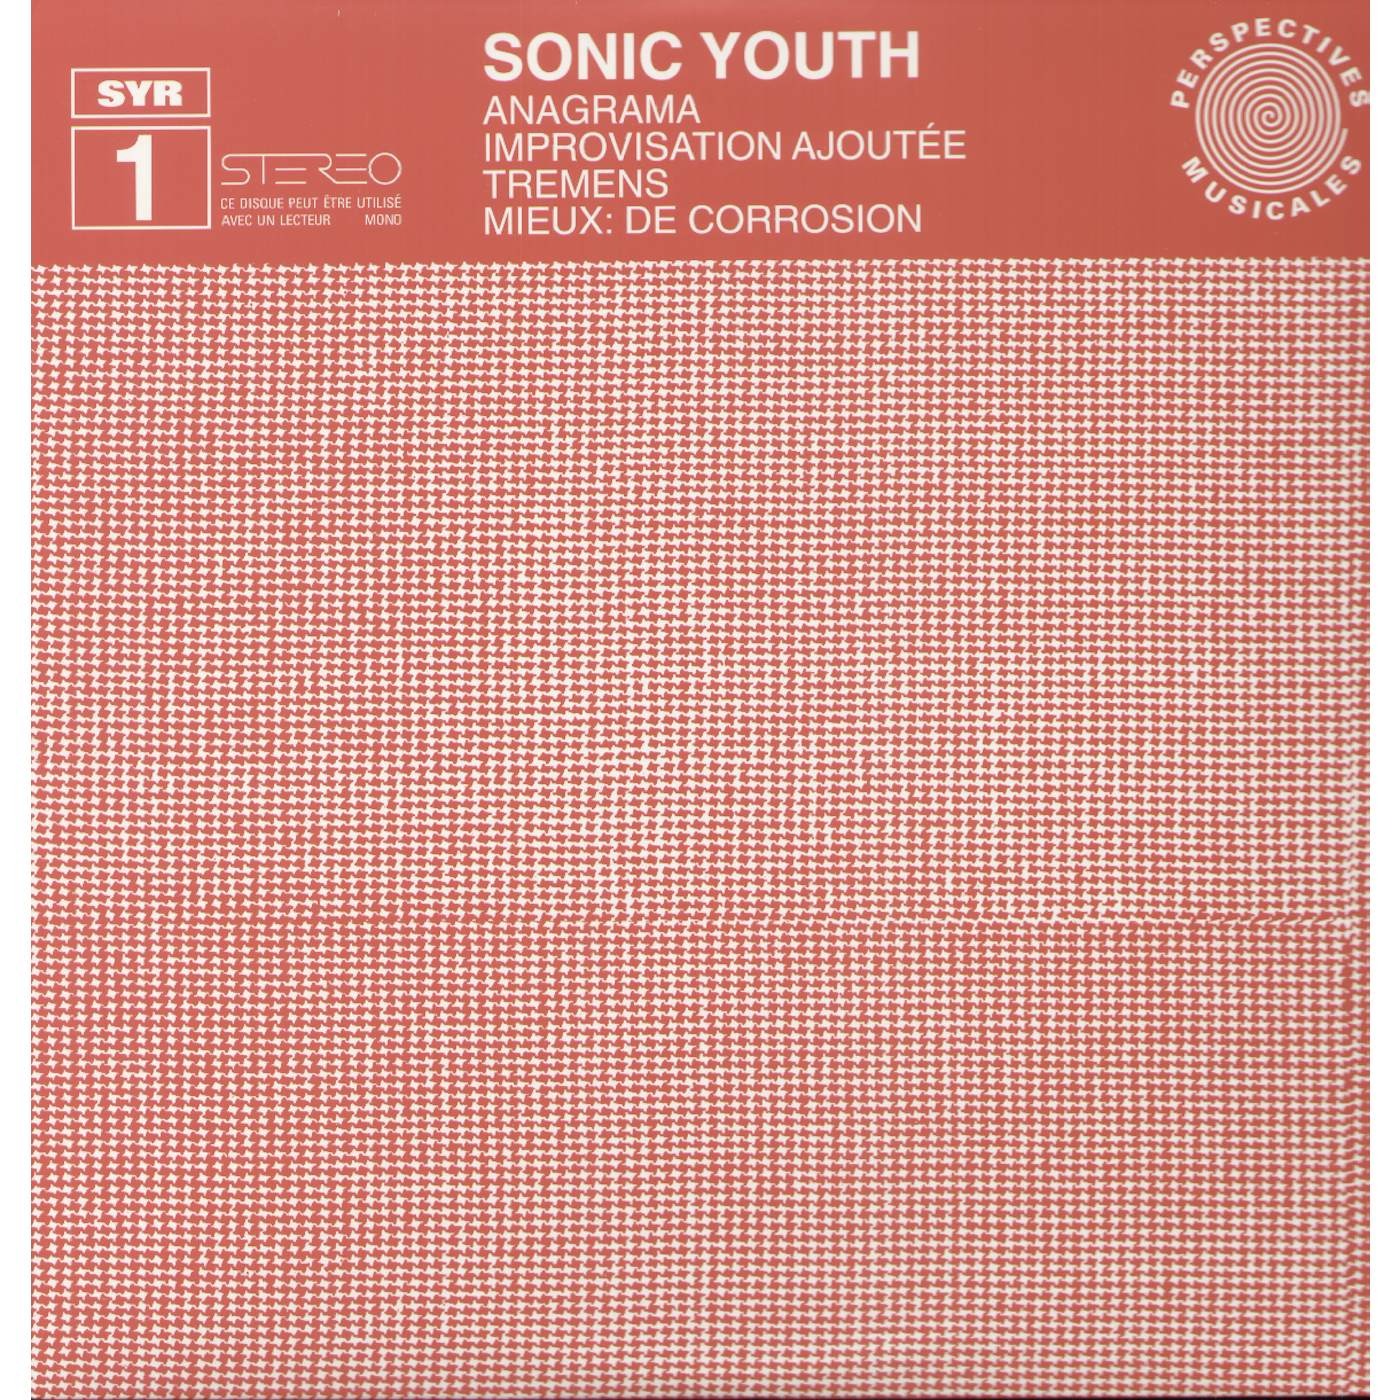 Sonic Youth Anagrama Vinyl Record